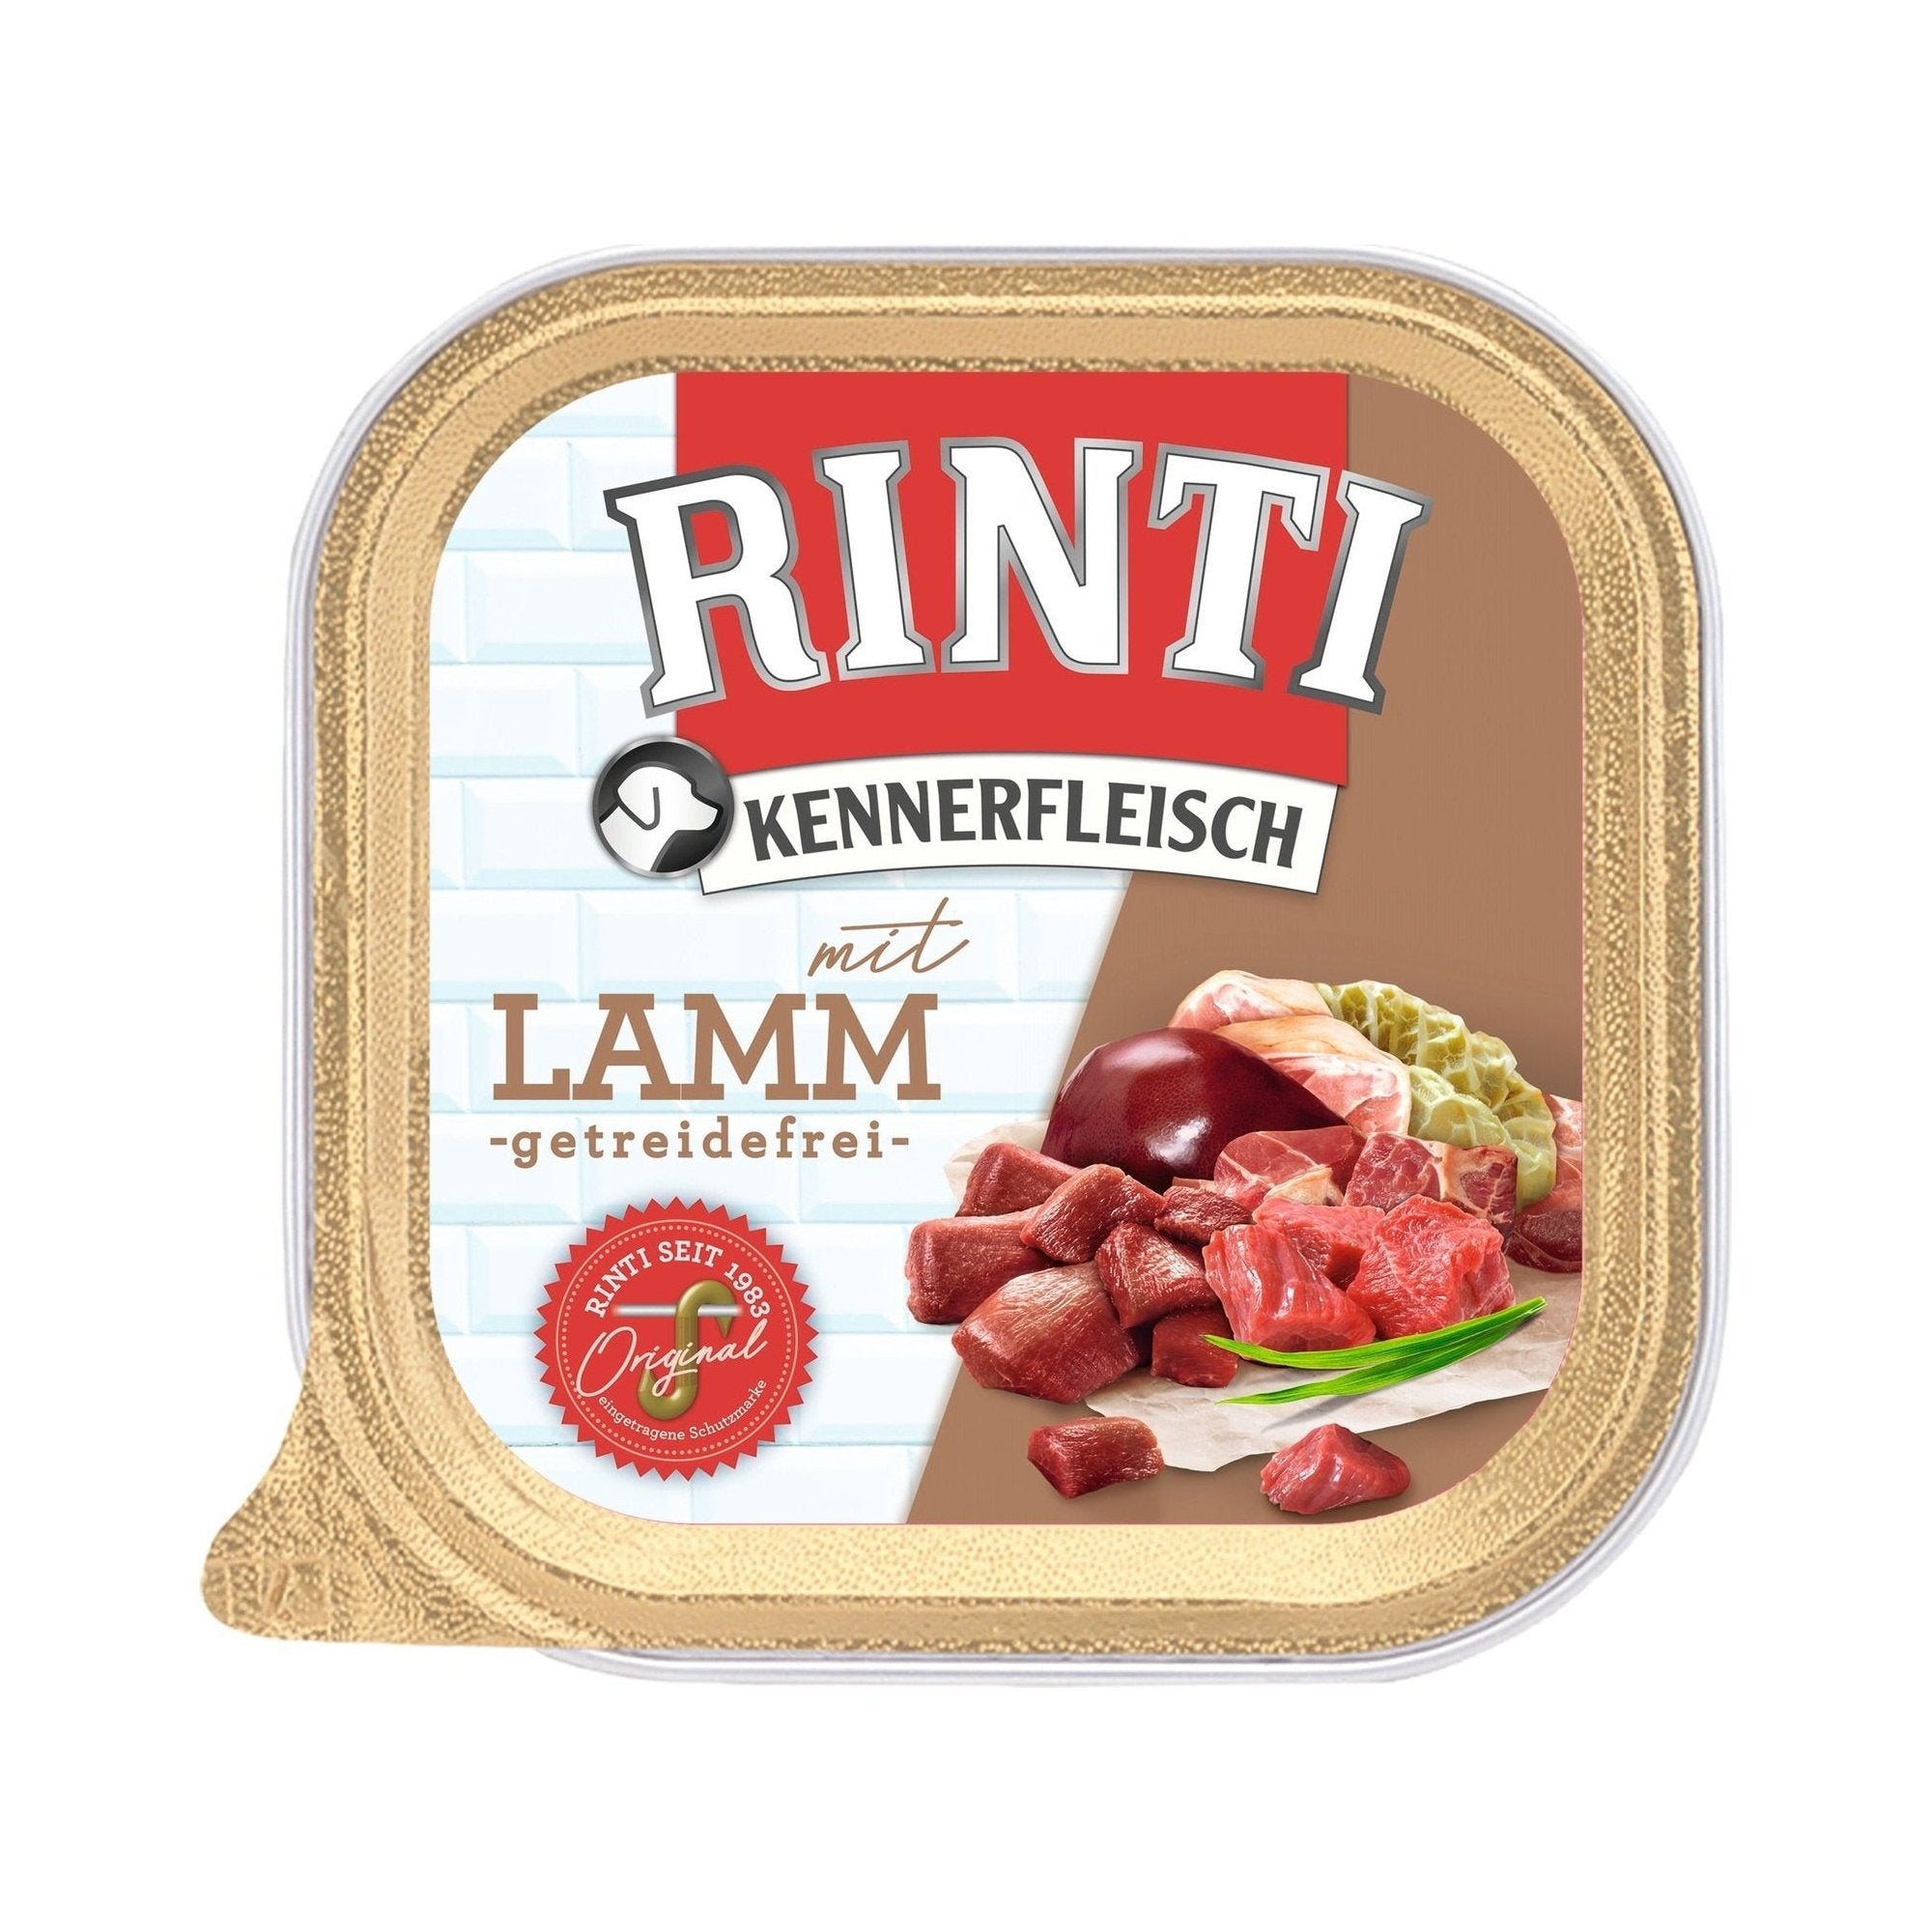 Rinti Kennerfleisch Plus Lamm - zoo.de